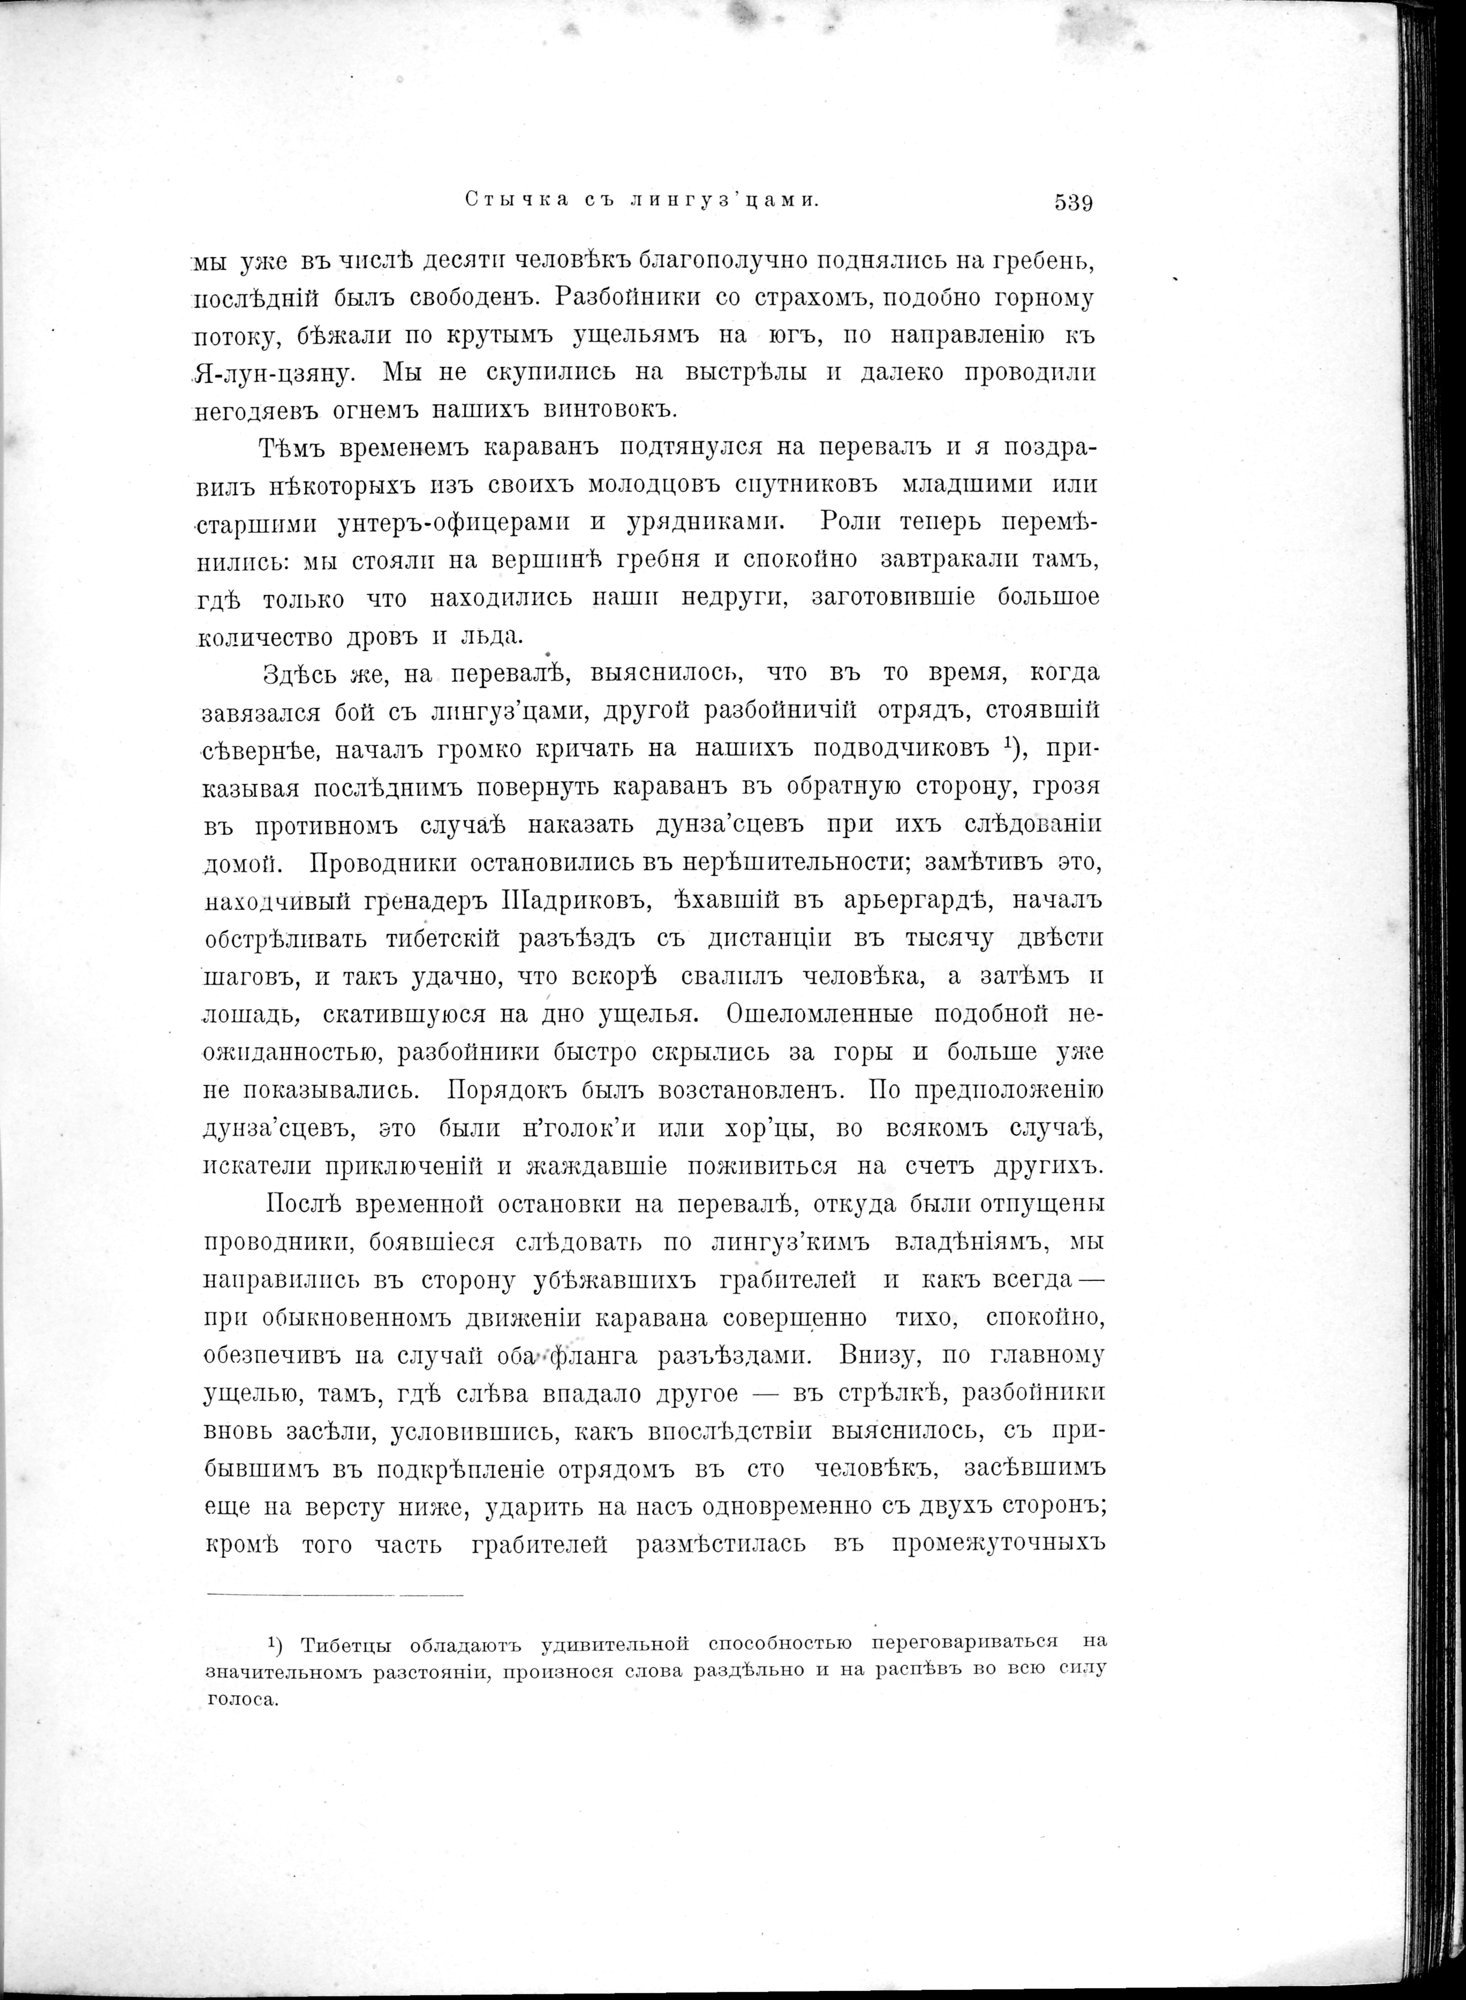 Mongoliia i Kam : vol.2 / Page 361 (Grayscale High Resolution Image)